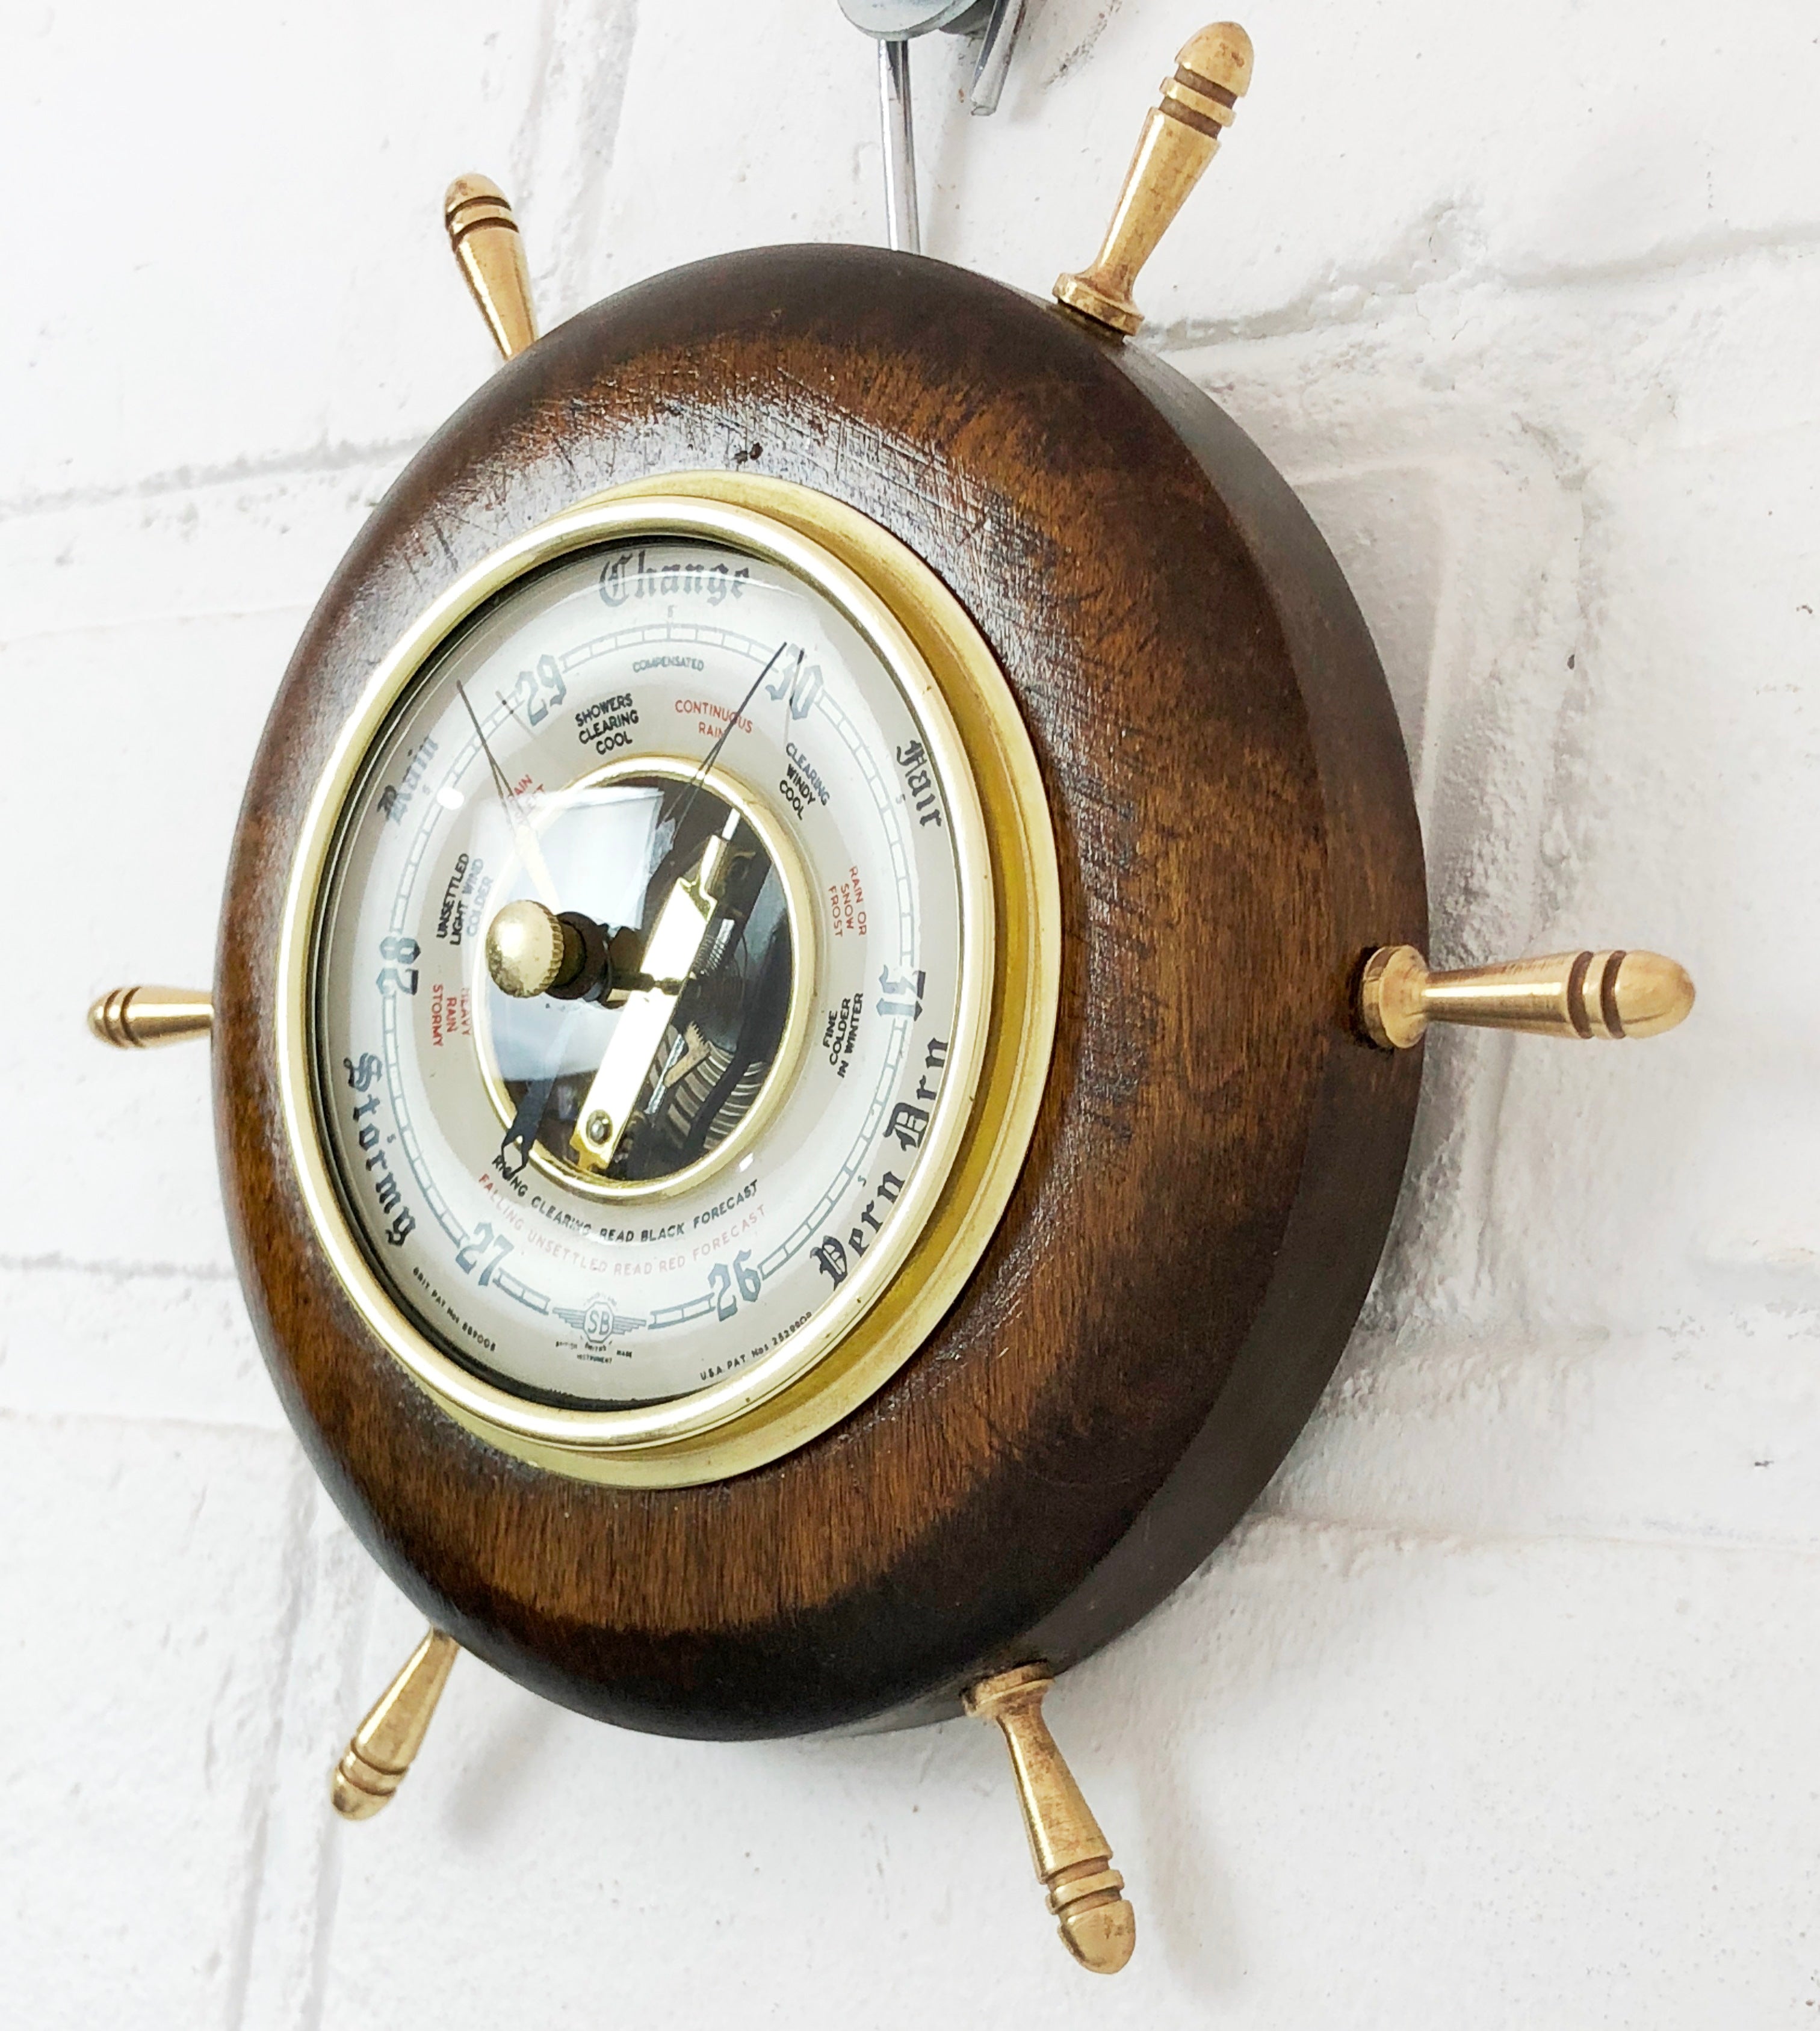 Vintage Shortland Smiths Ships Wheel Wall Barometer | eXibit collection